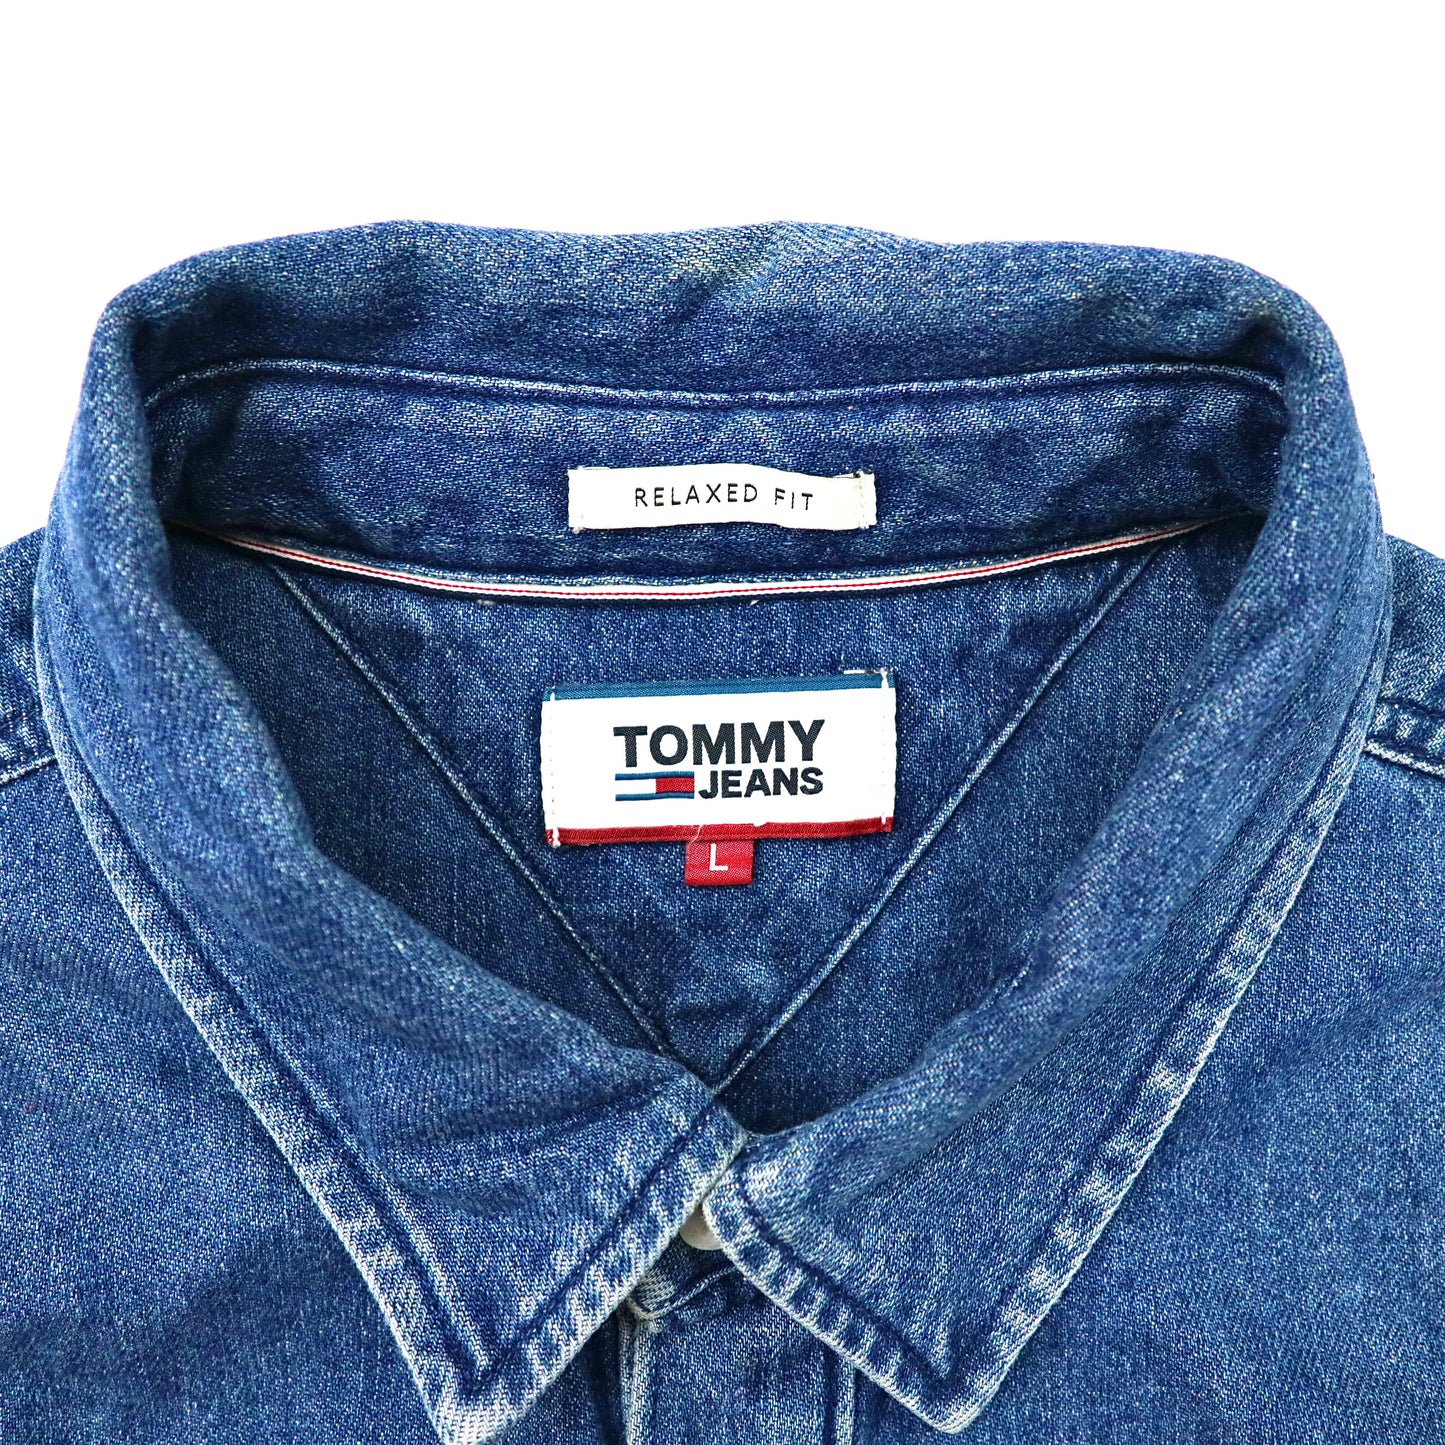 TOMMY JEANS バックグラフィック デニムシャツ L ブルー スナップボタン DM0DM06735